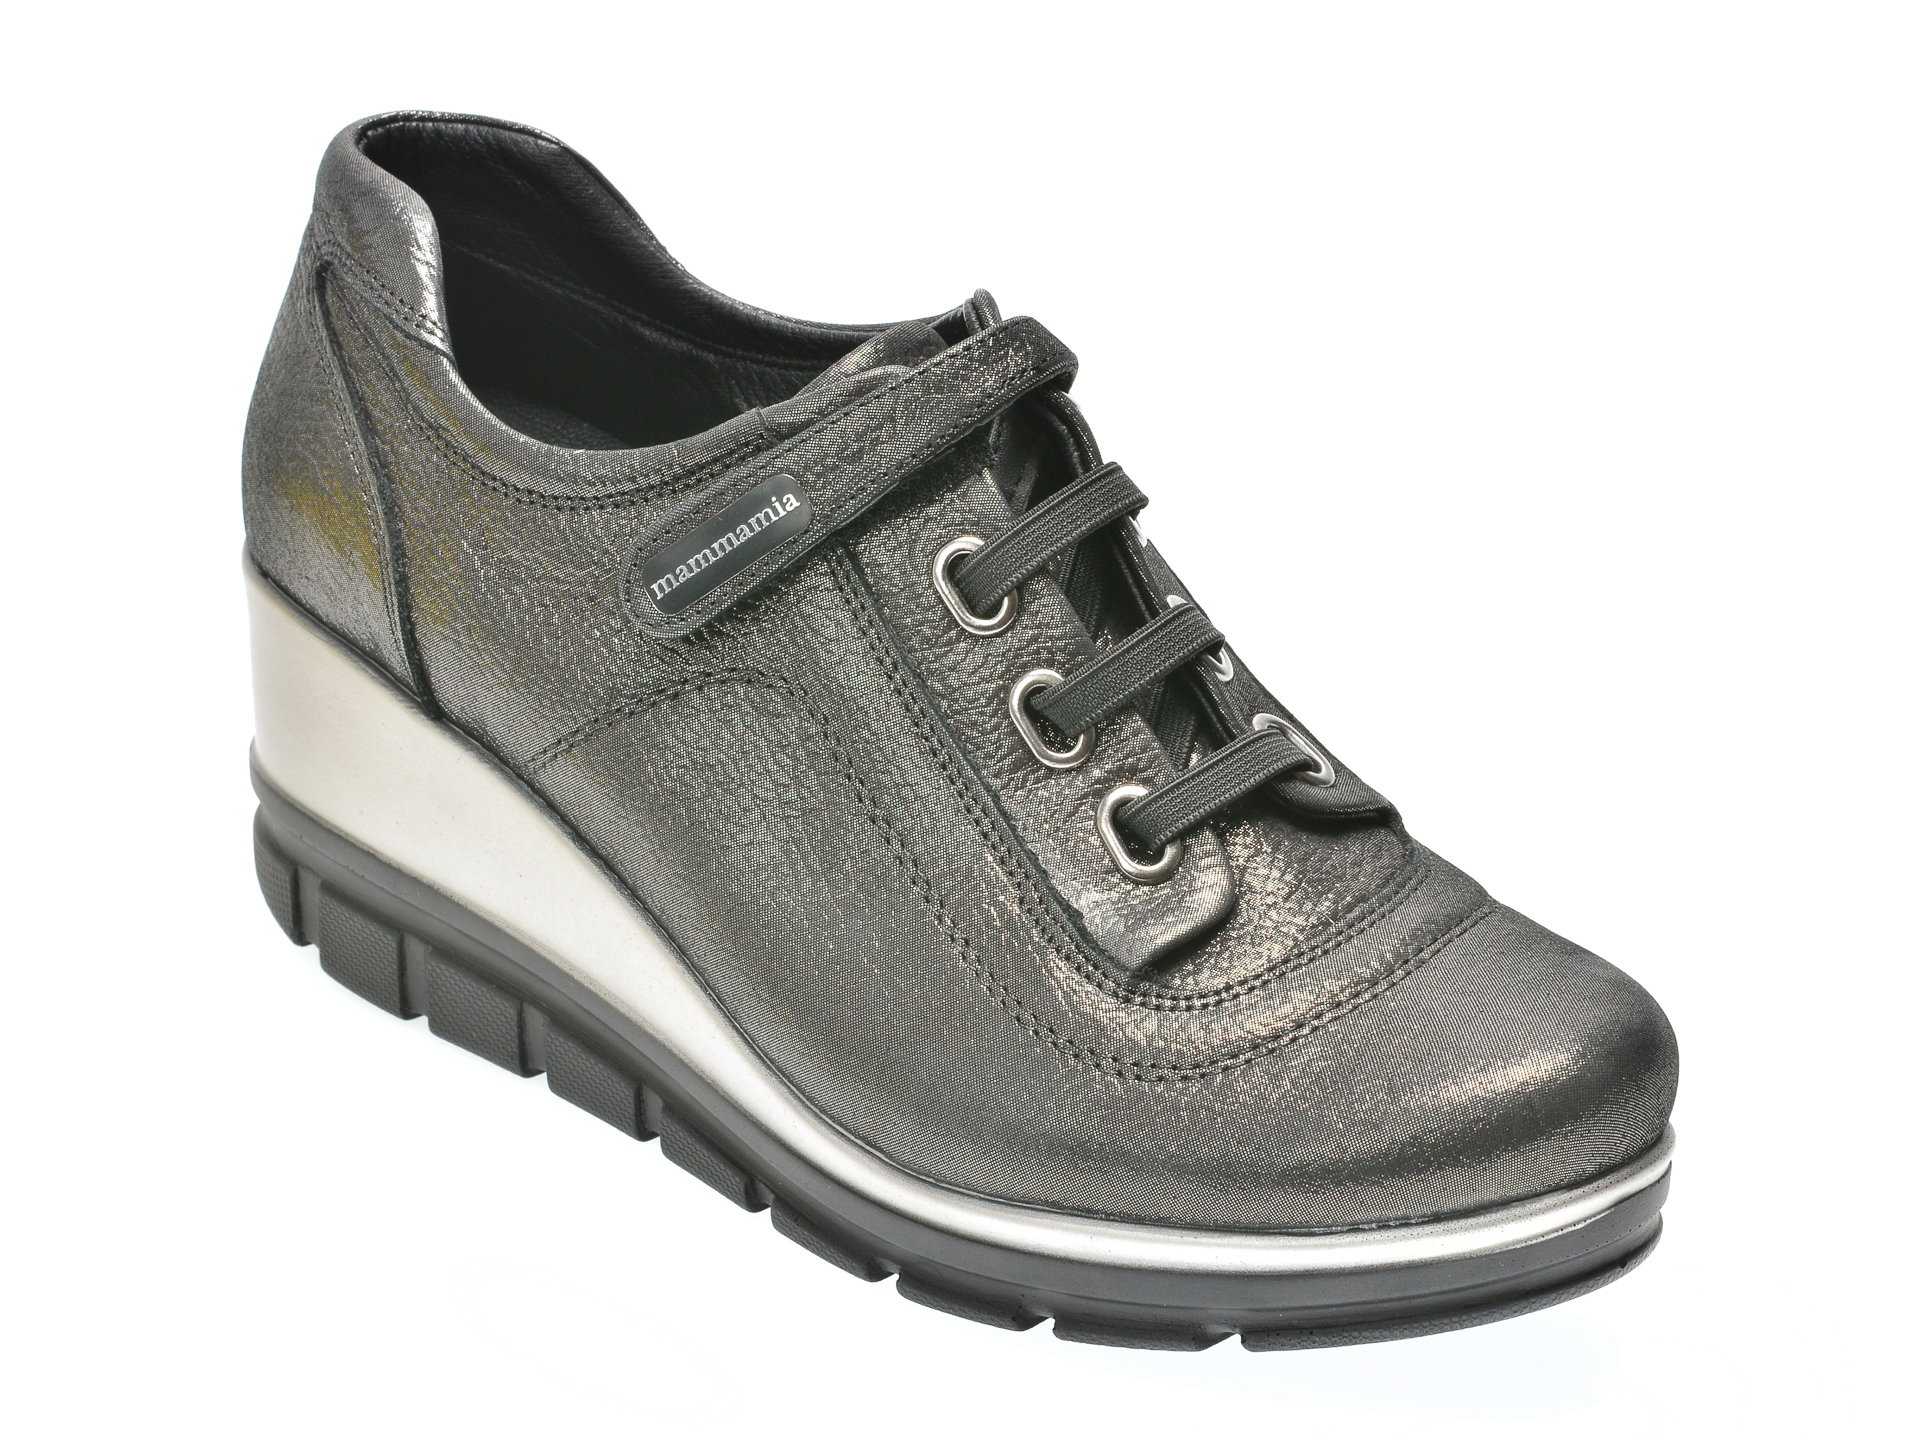 Pantofi MAMMA MIA argintii, Mm17, din piele naturala